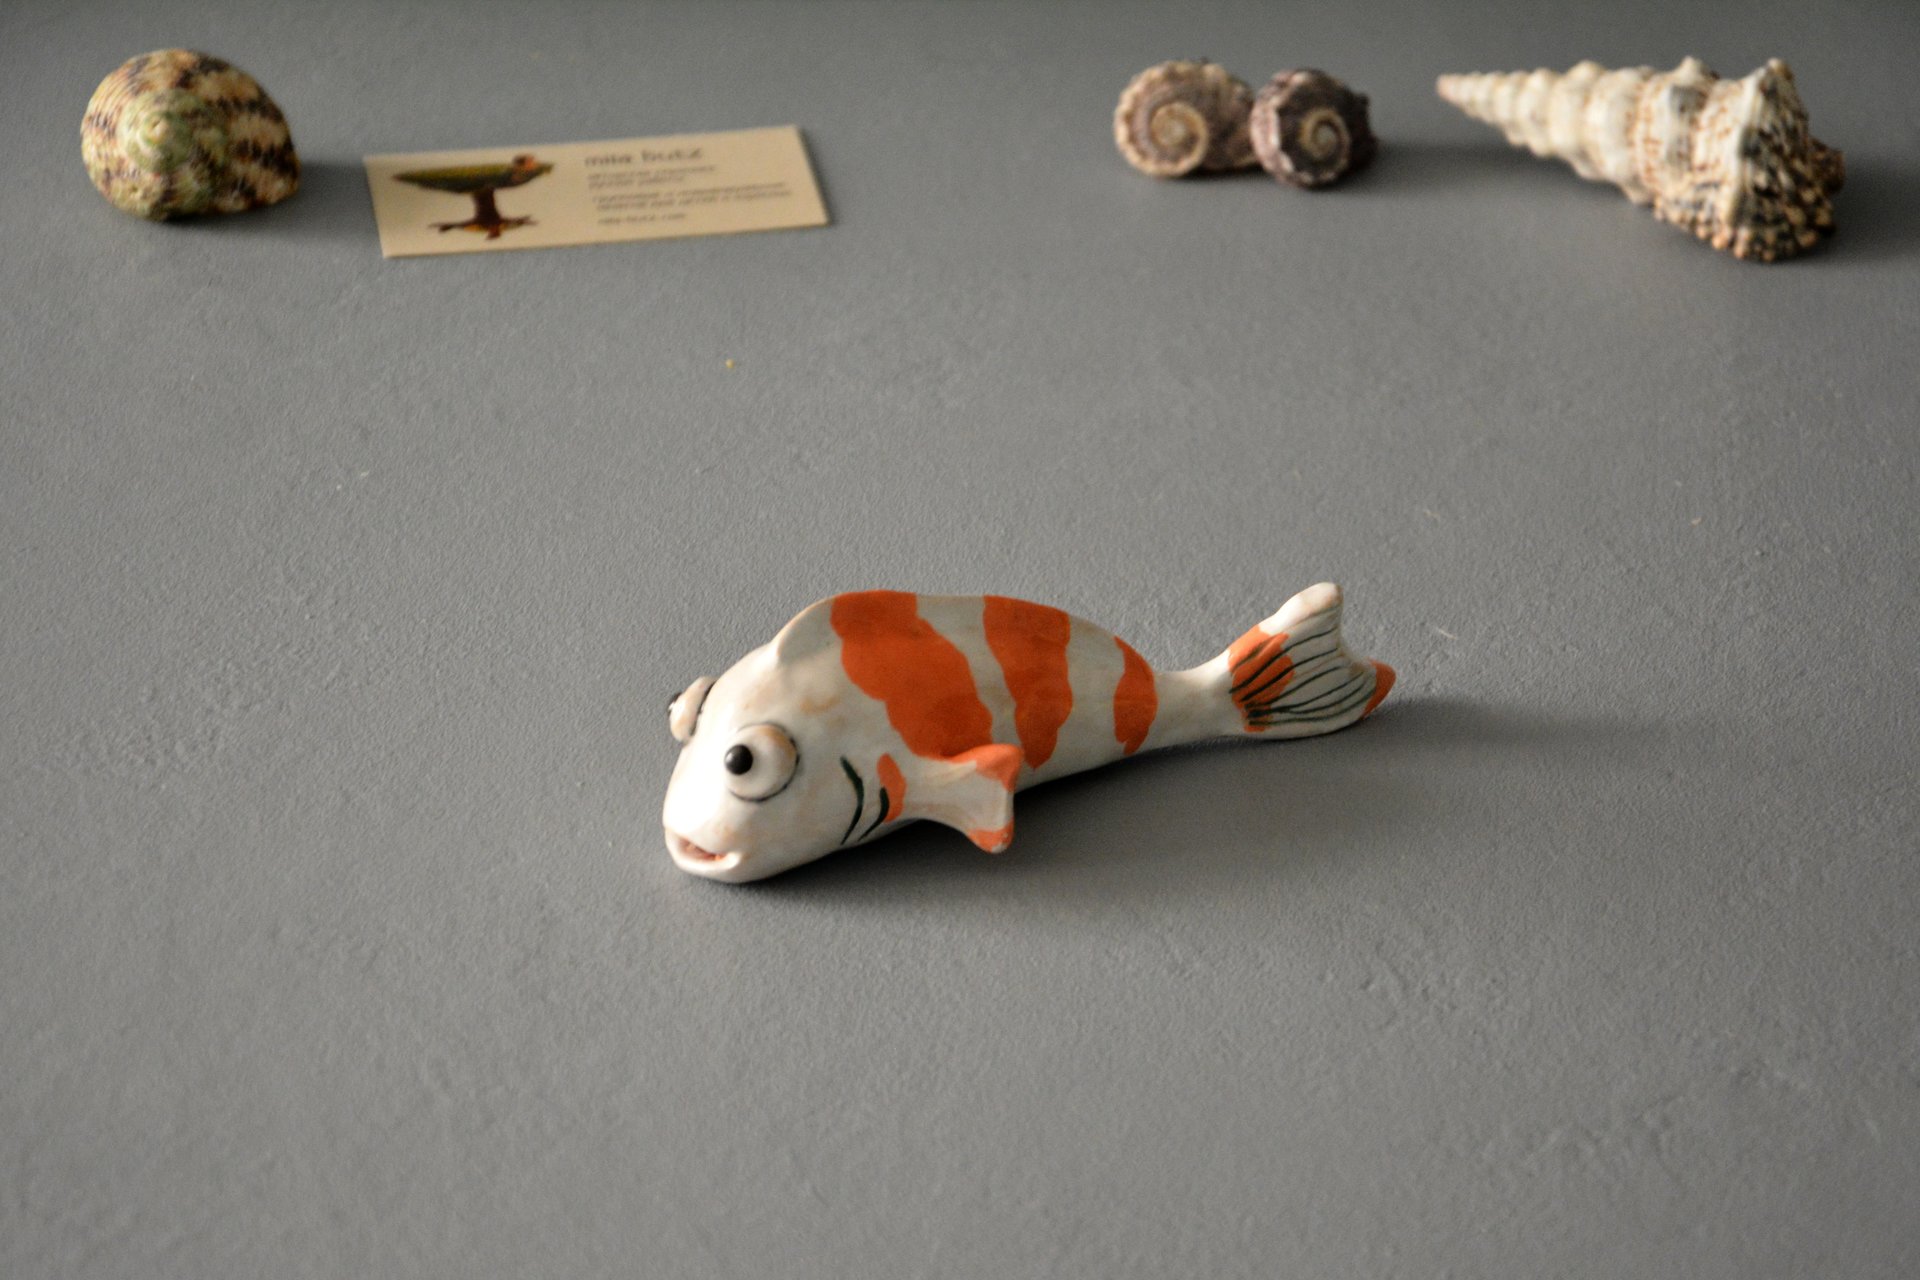 Ceramic Figurine of the Koi fish carp, length - 14 cm, width - 6 cm, height - 5 cm, photo 2 of 6.